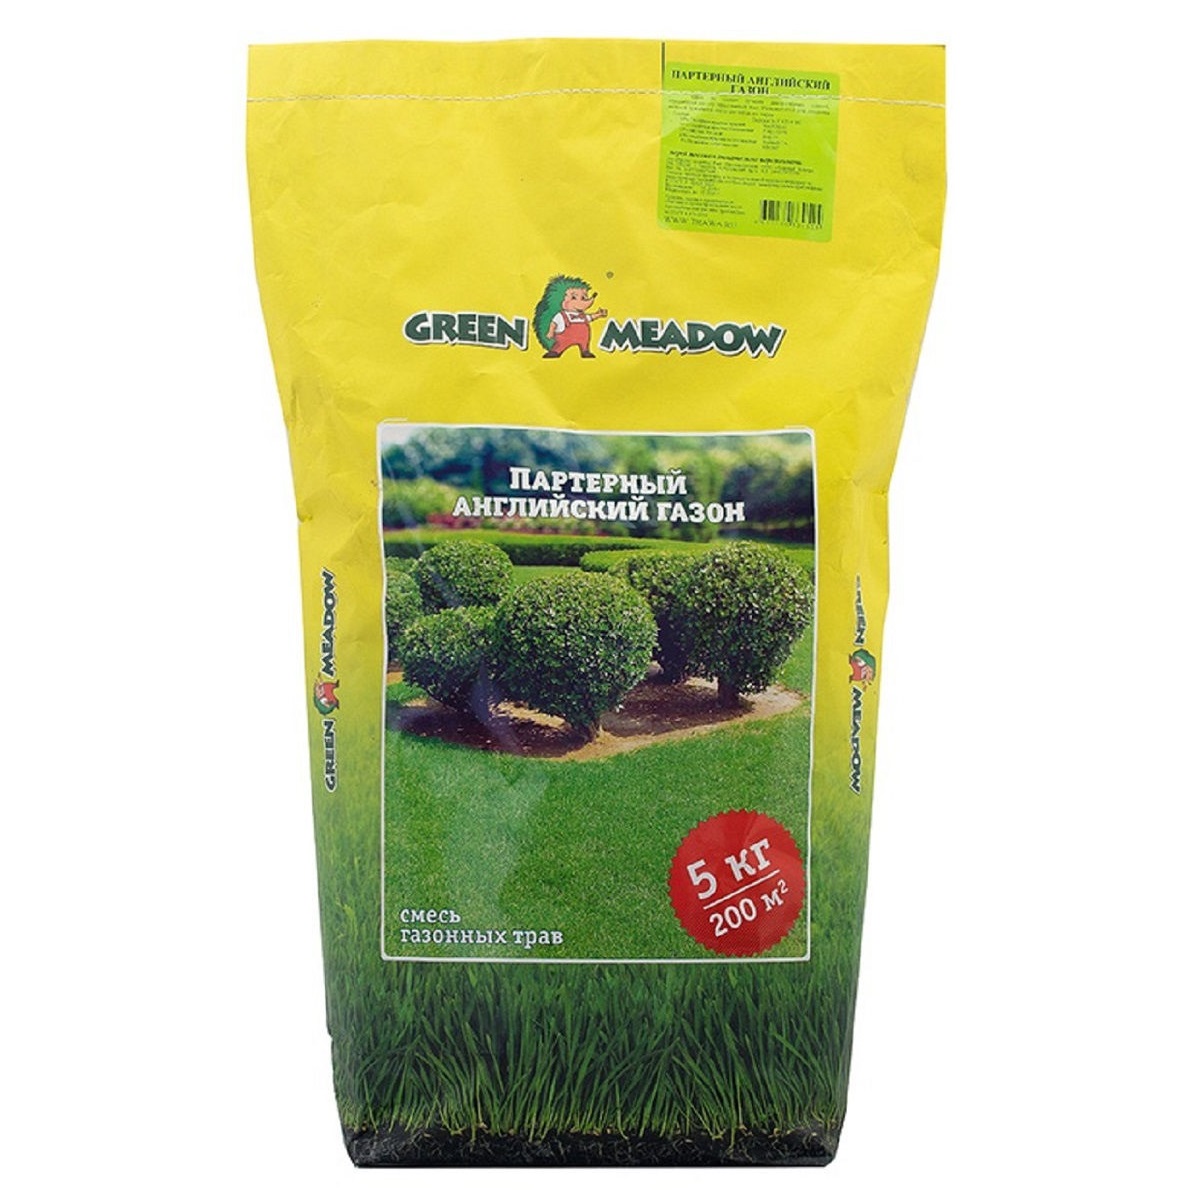 Газон Green Meadow партерный английский 5 кг декоративный газон green scape английский газон 5 кг